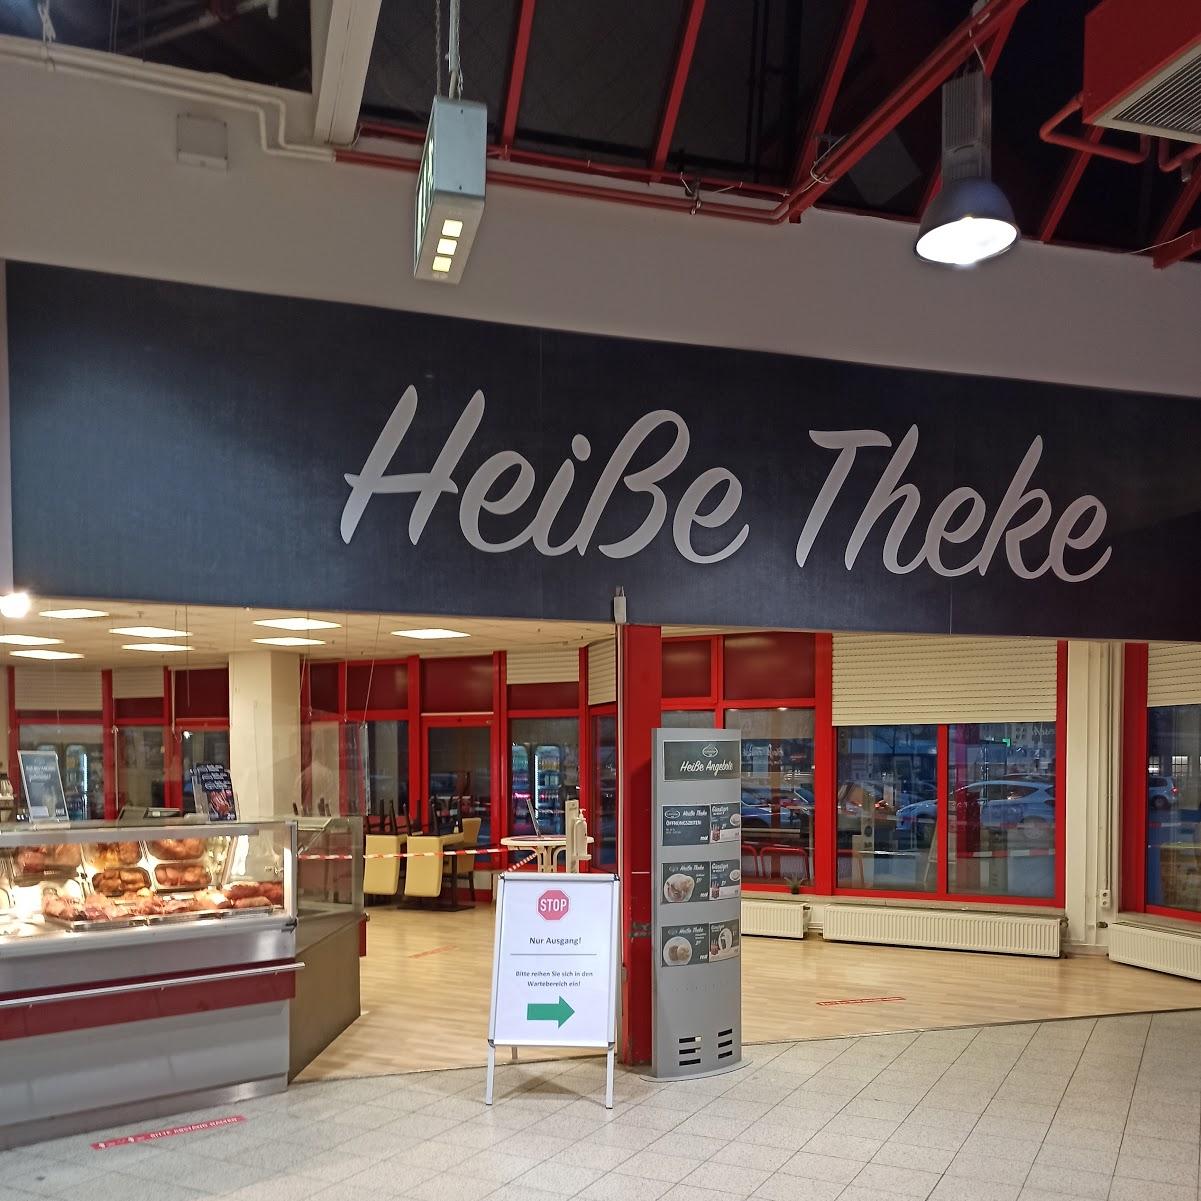 Restaurant "Heiße Theke" in Uelzen